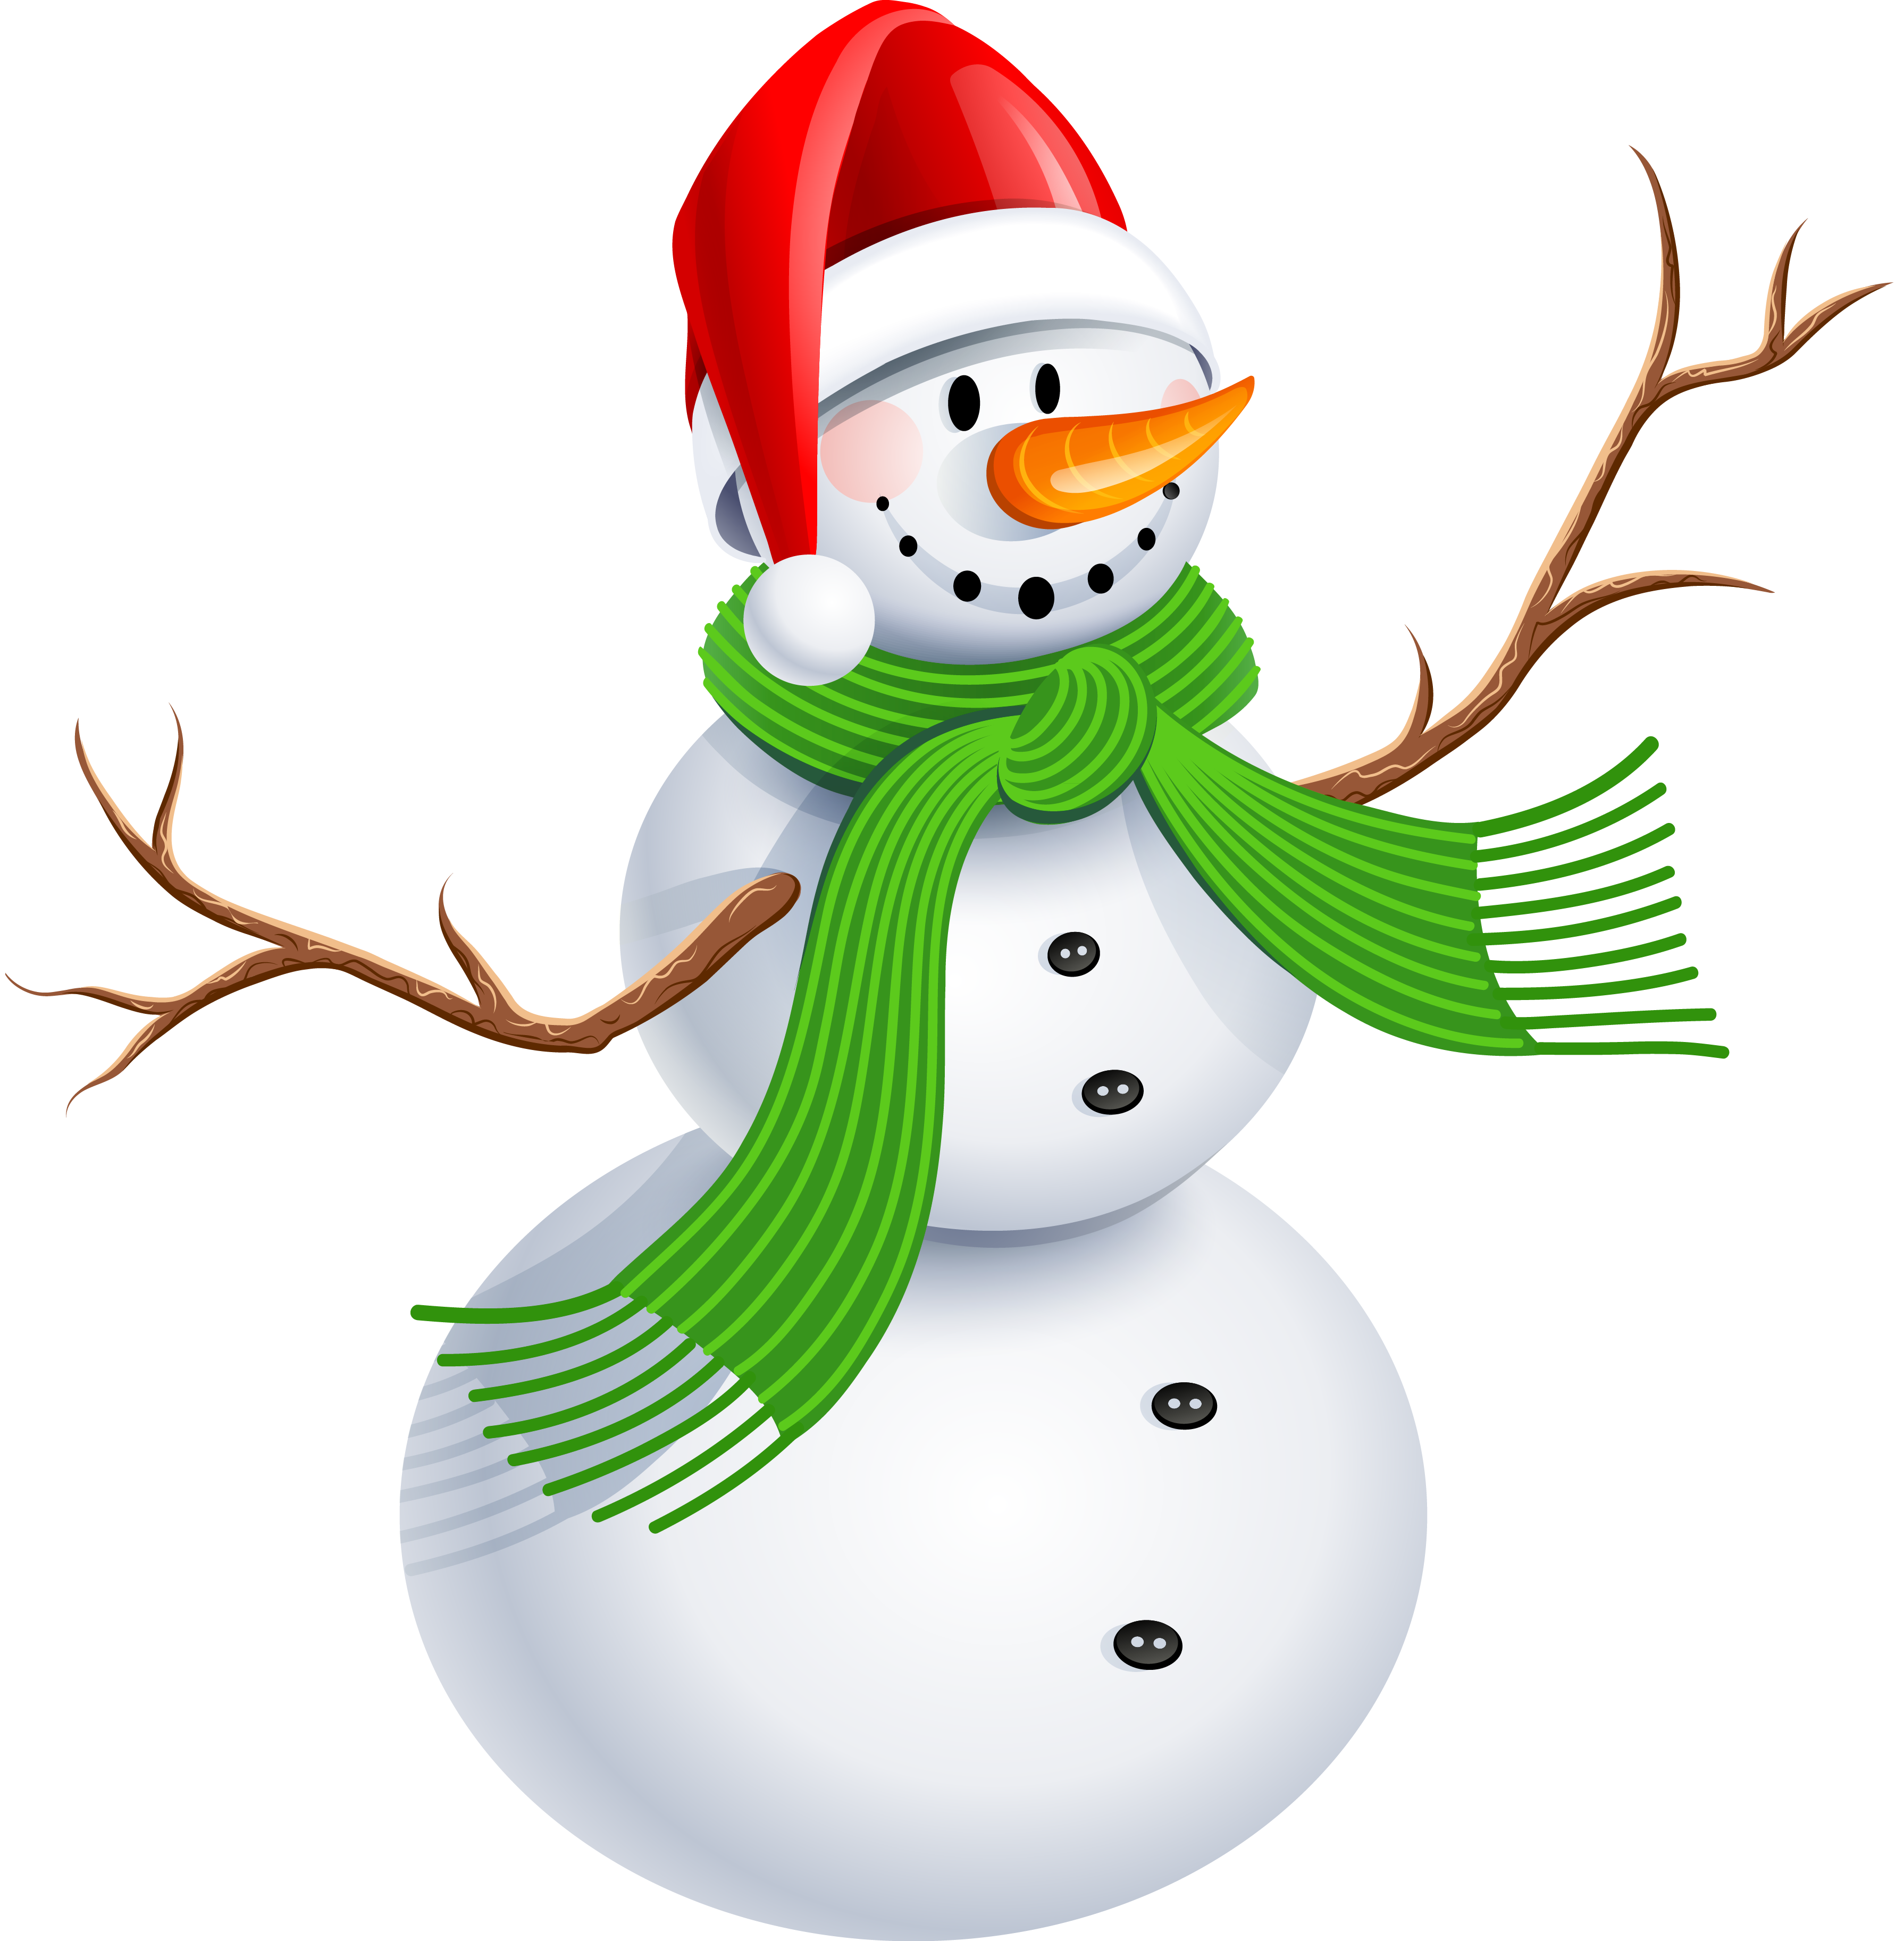 free vector snowman clipart - photo #18